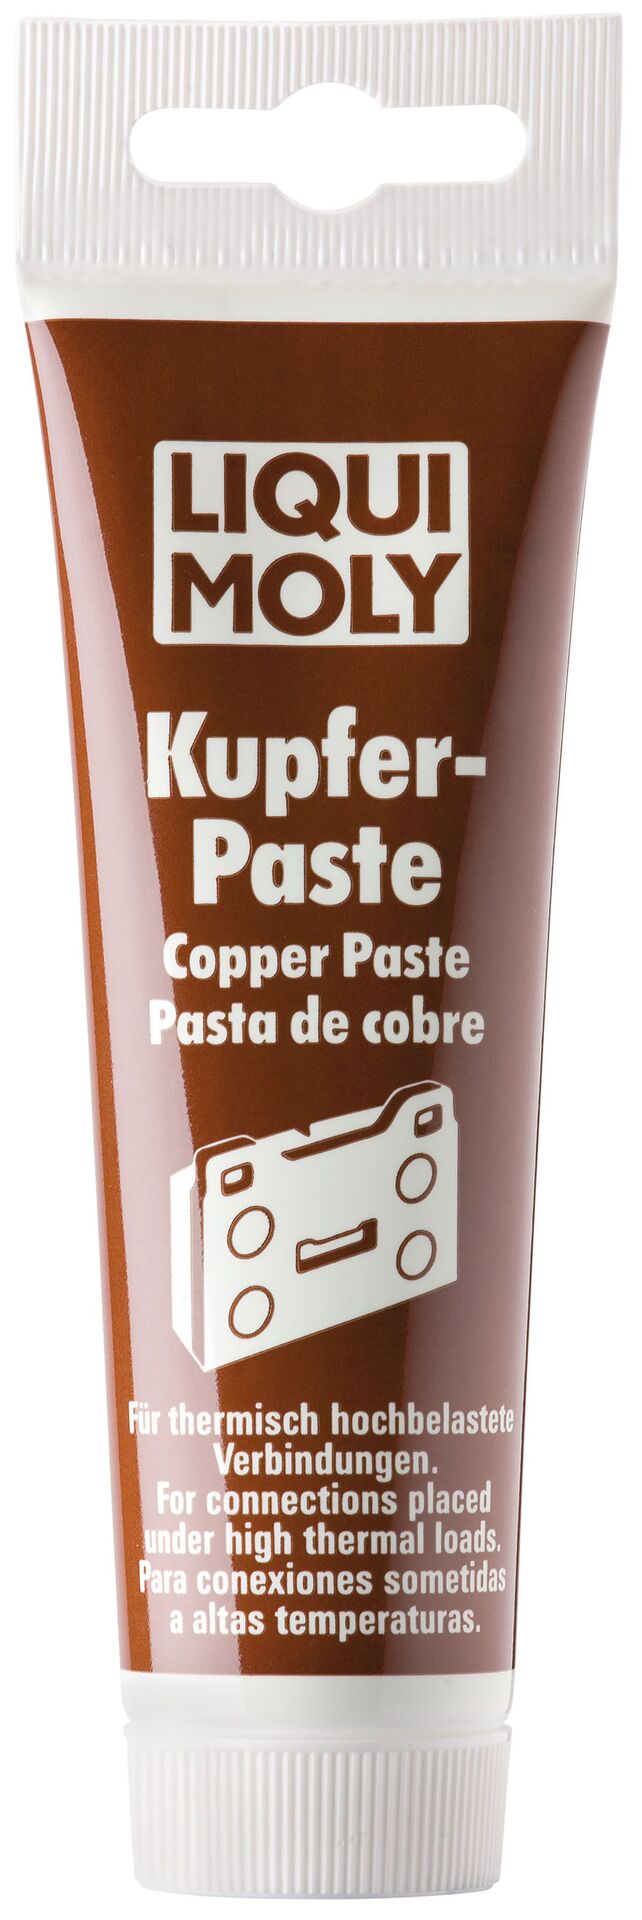 Liqui Moly Kupfer-Paste